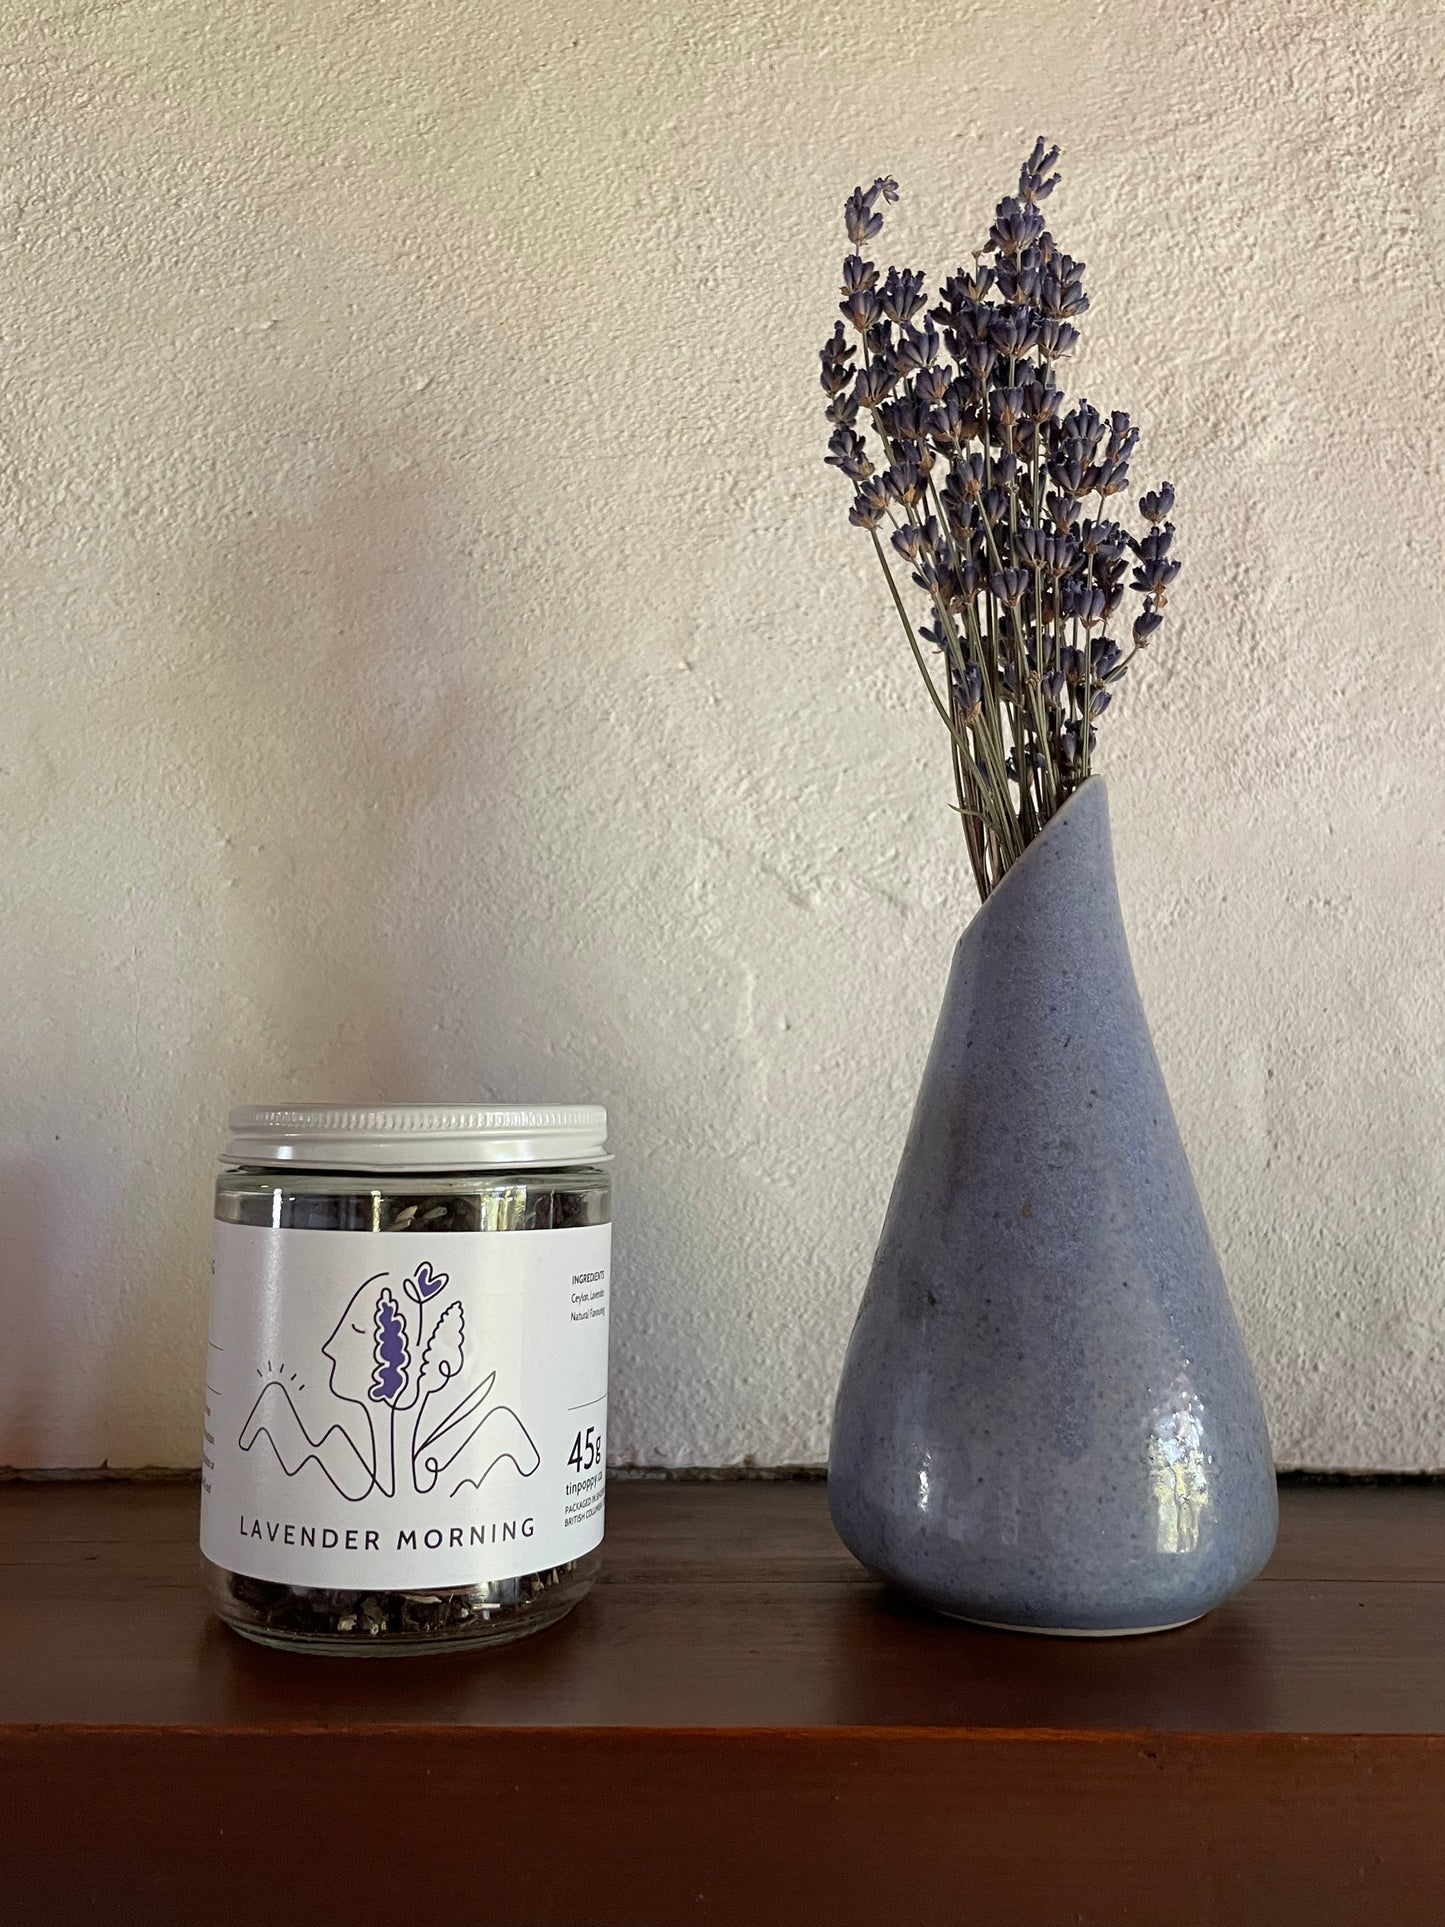 A jar of Earl Grey Tea and Lavender